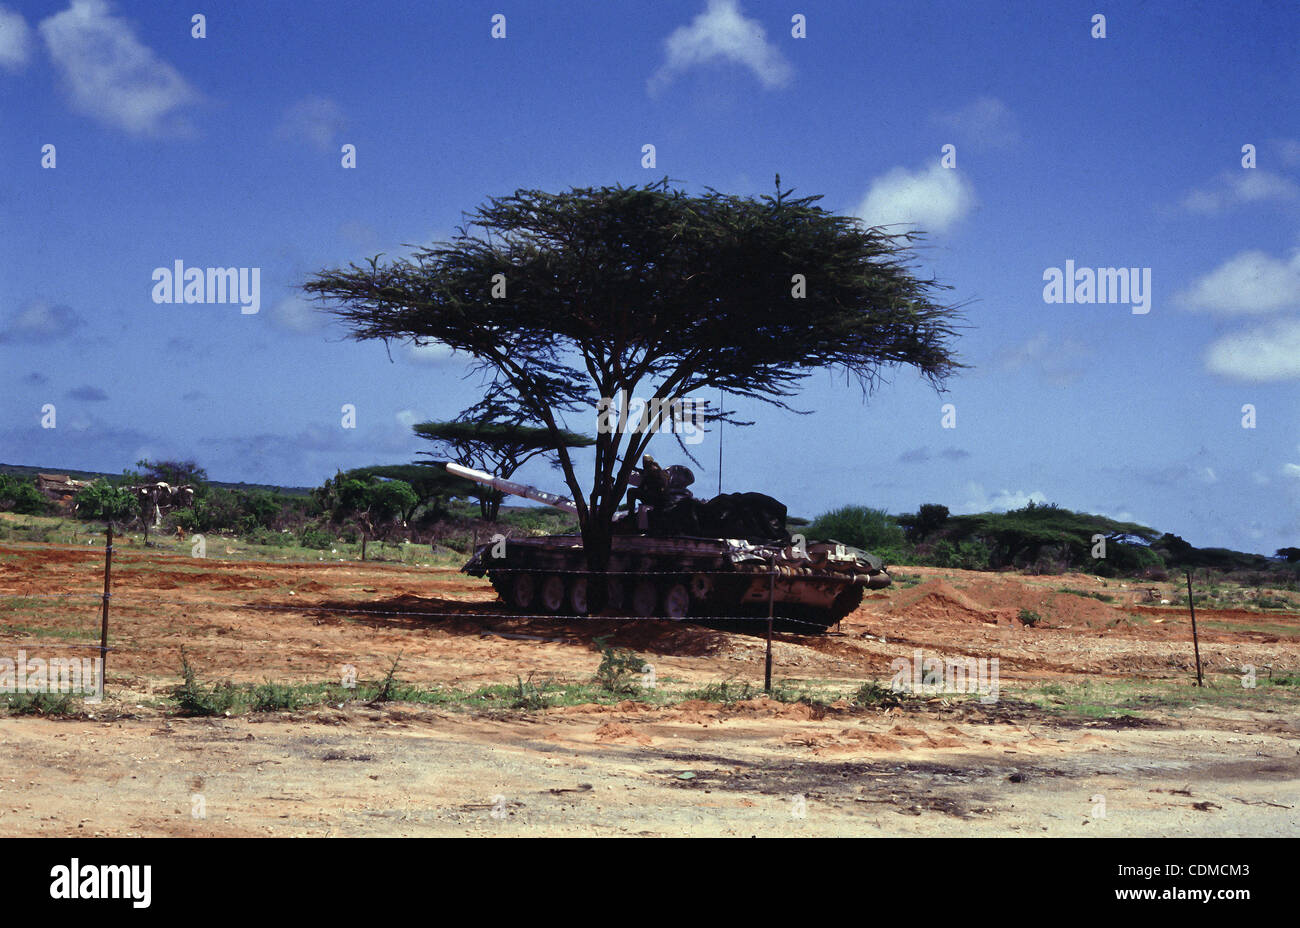 April 4, 2011 - Kismayo, Somalia - UN Indian peaekeepers in a tank guarding main road into  Kismayo Somalia (Credit Image: © Theodore Liasi/ZUMAPRESS.com) Stock Photo